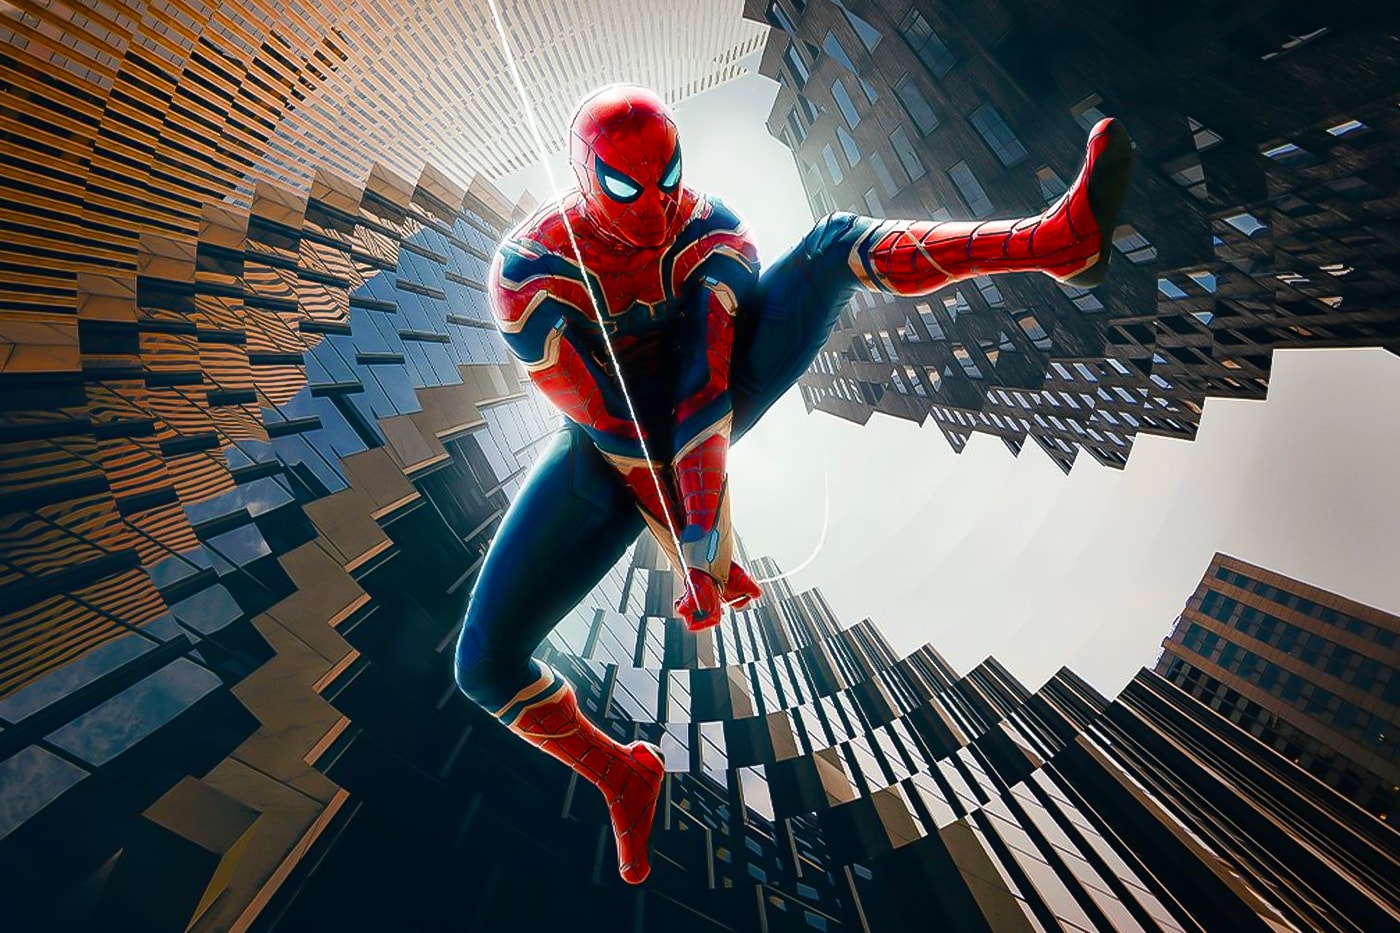 spider man No Way Home Surpasses 600 million usd North America box office sony marvel tom holland zendaya jacob batallon